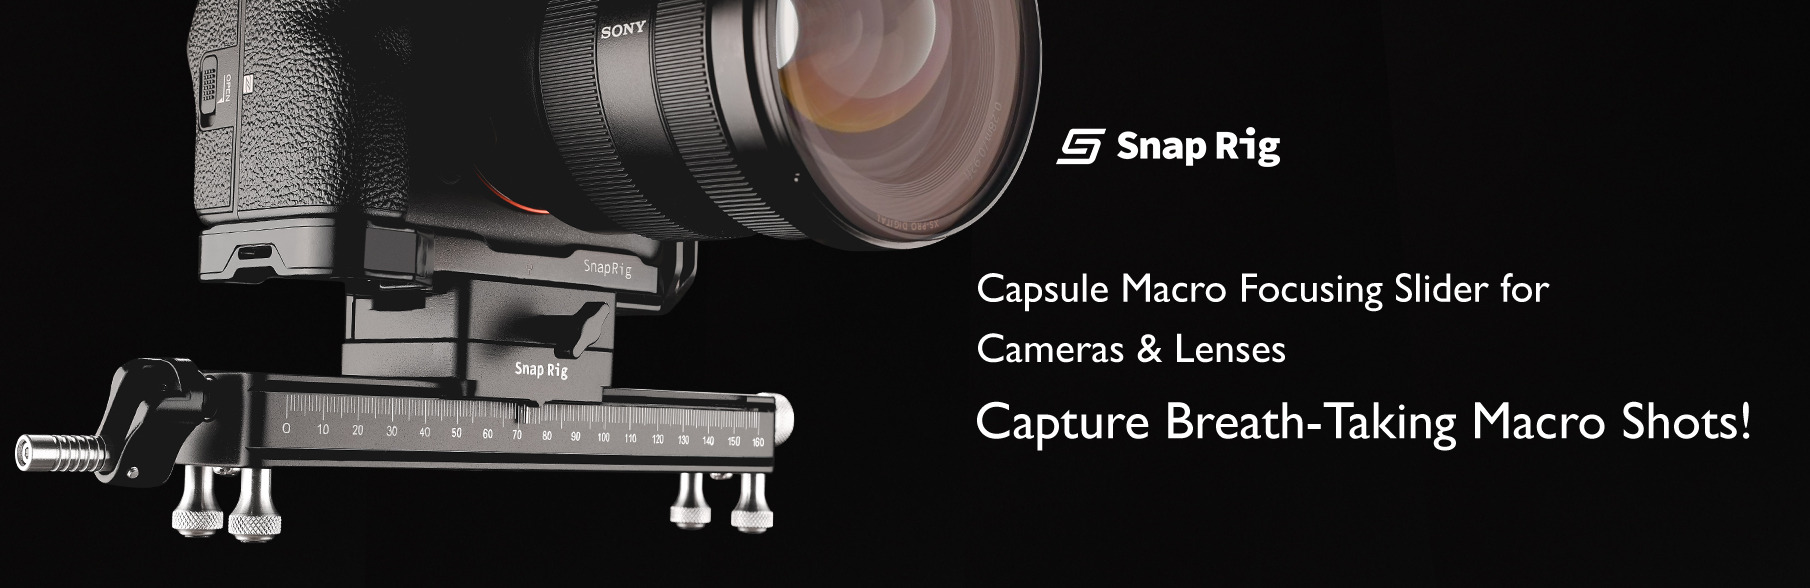 Proaim SnapRig Capsule Macro Focusing Rail for Macro Photography. SL211